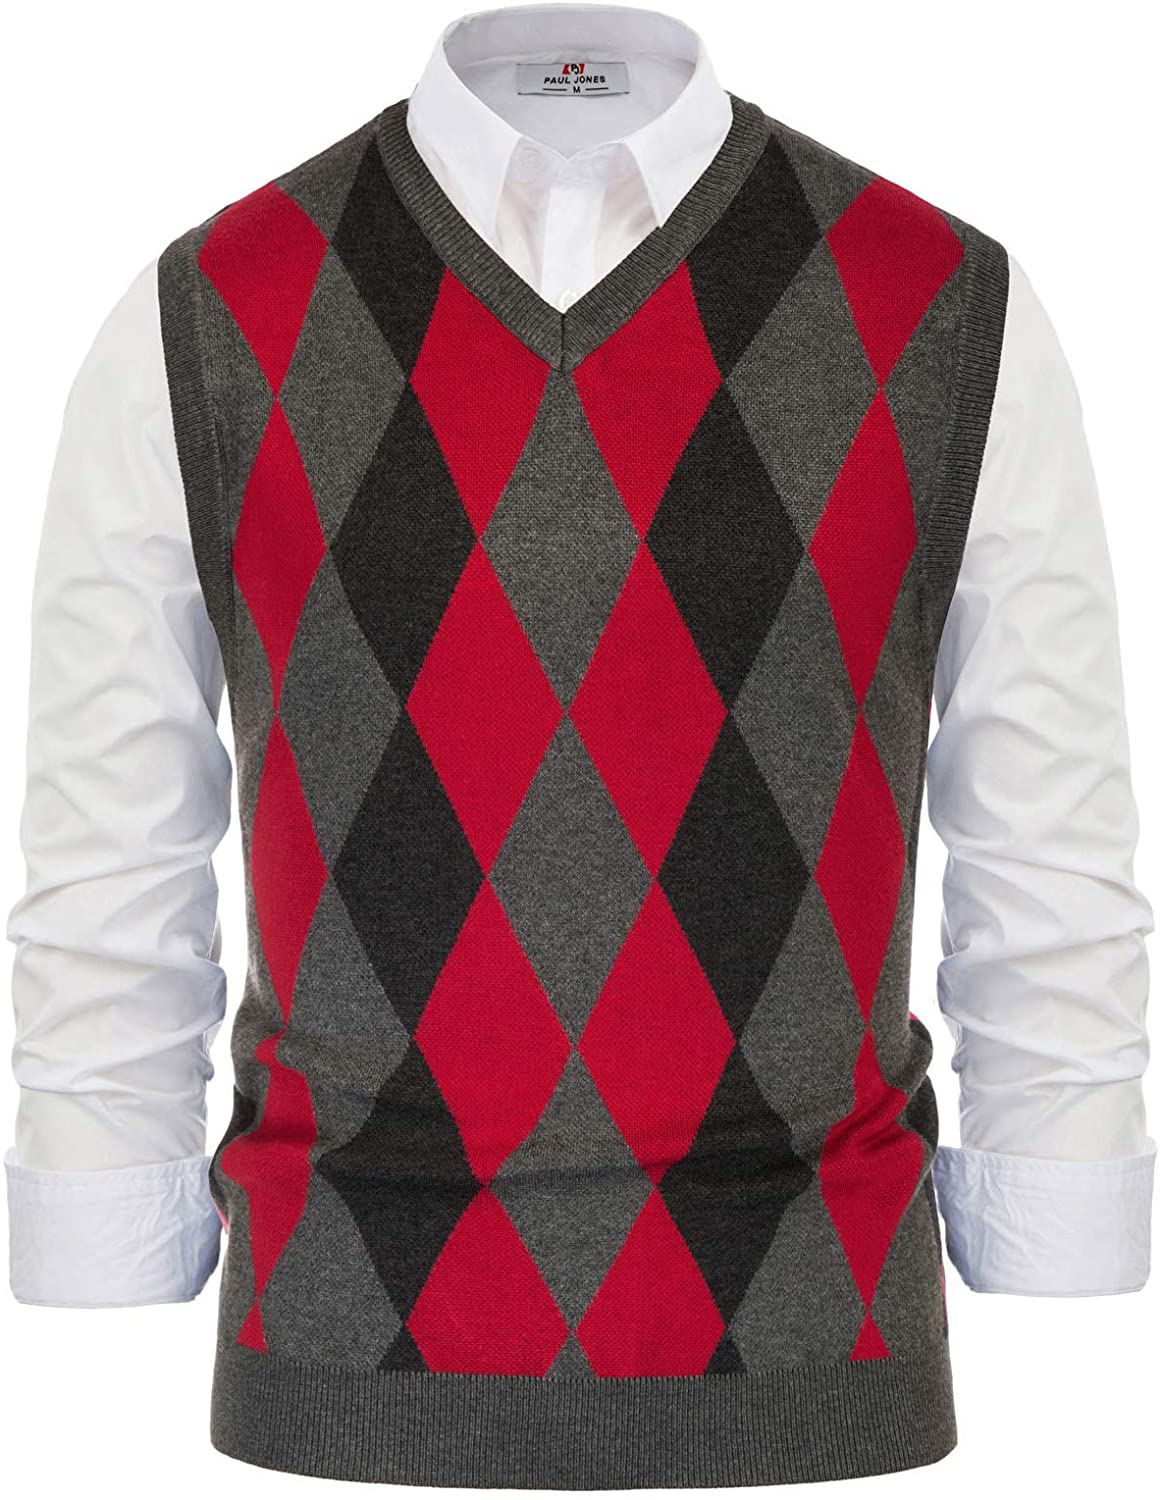 Paul Jones Mens Argyle Sweater Vest Knitted Casual V-Neck Pullover Vest 